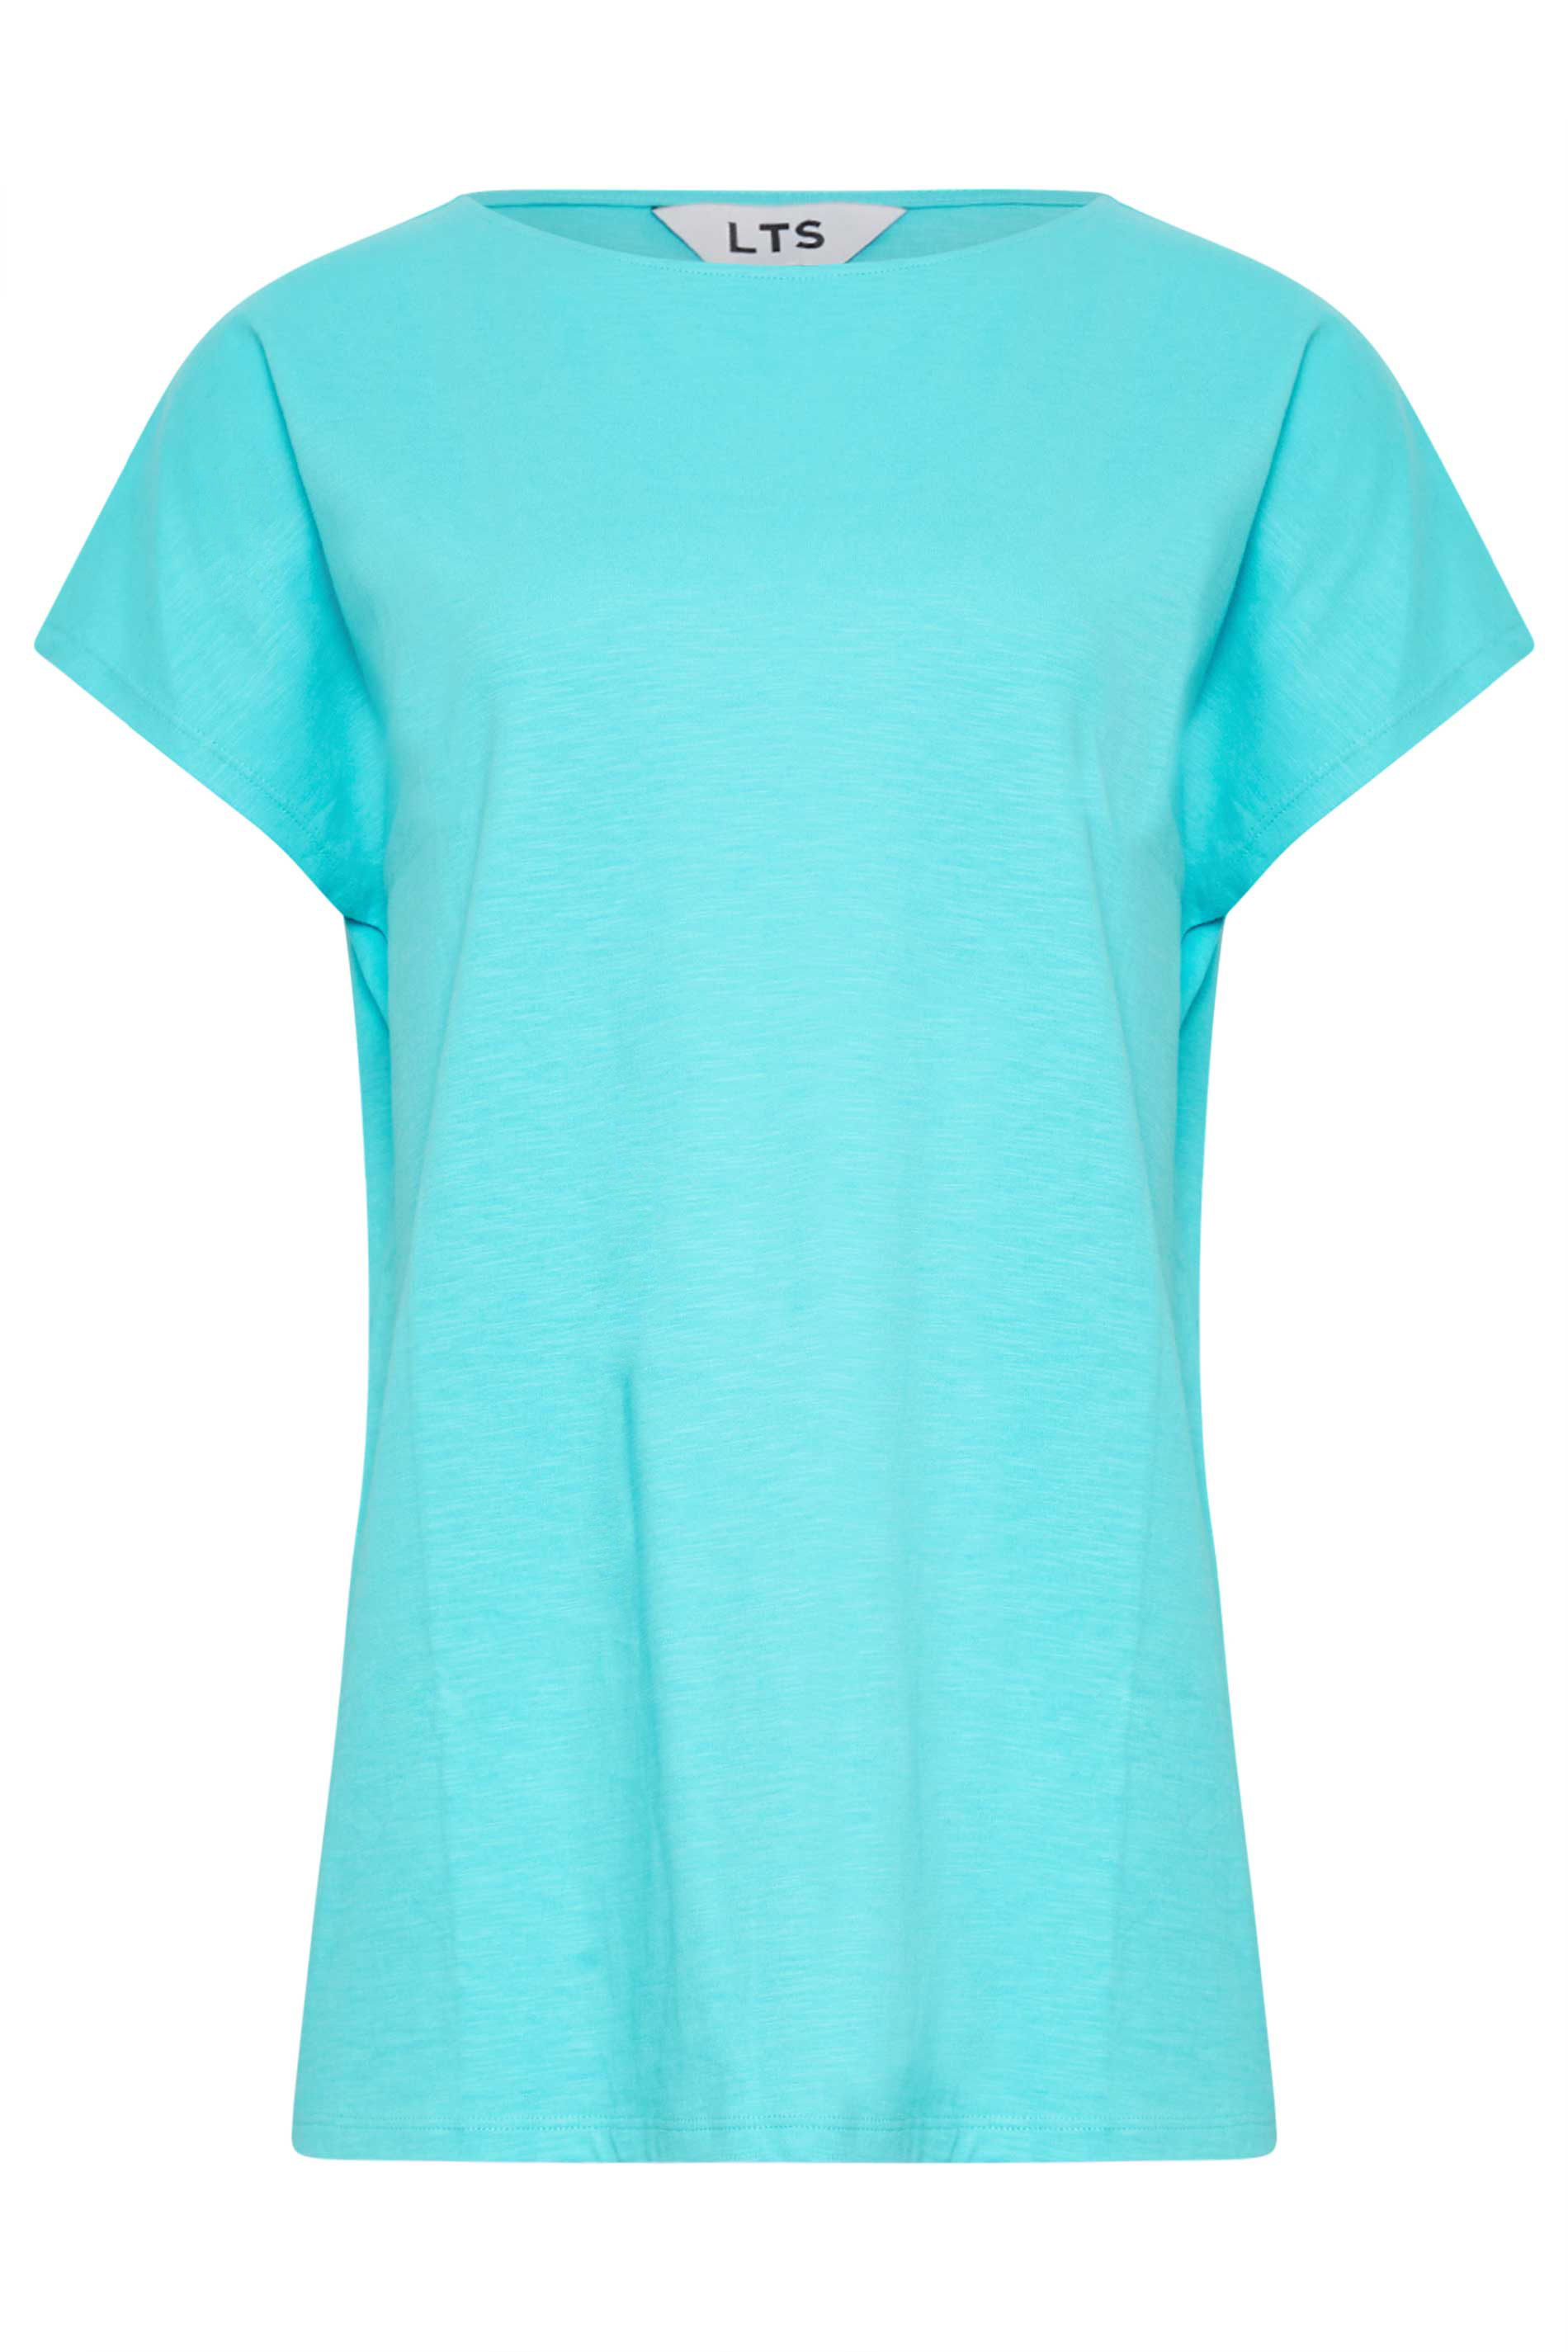 LTS Tall Womens Bright Blue Short Sleeve T-Shirt